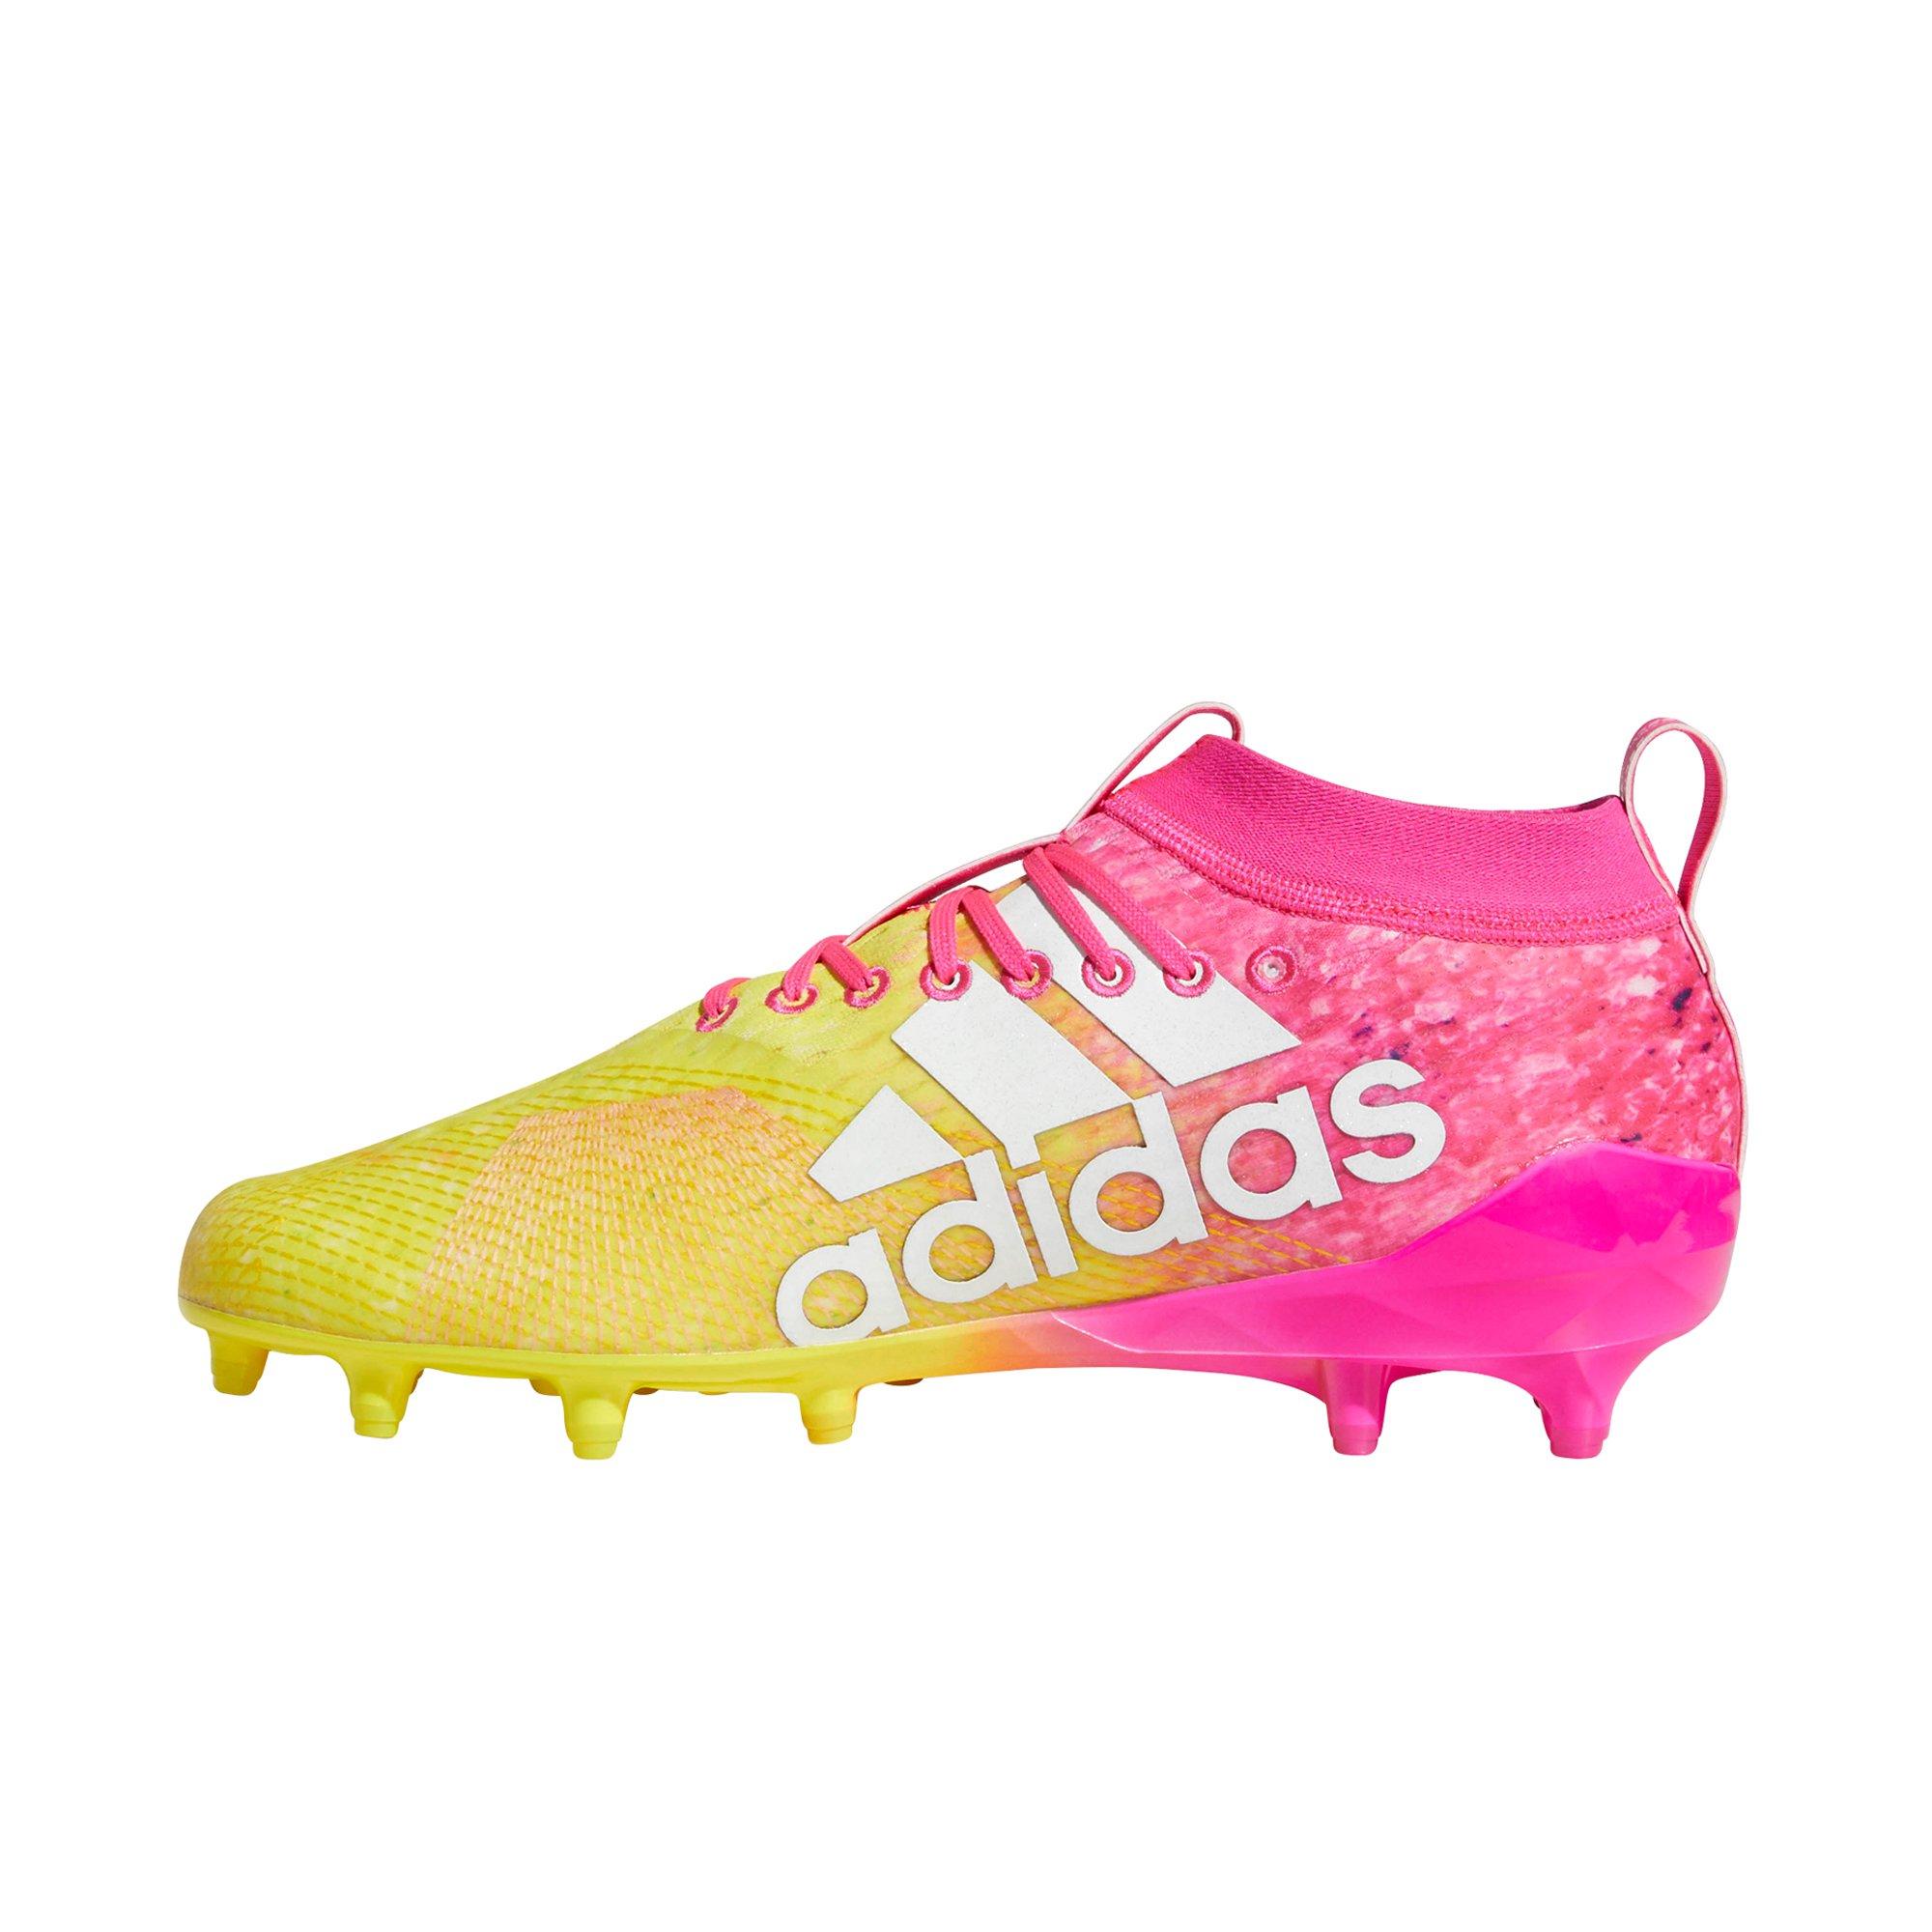 pink adidas cleats football